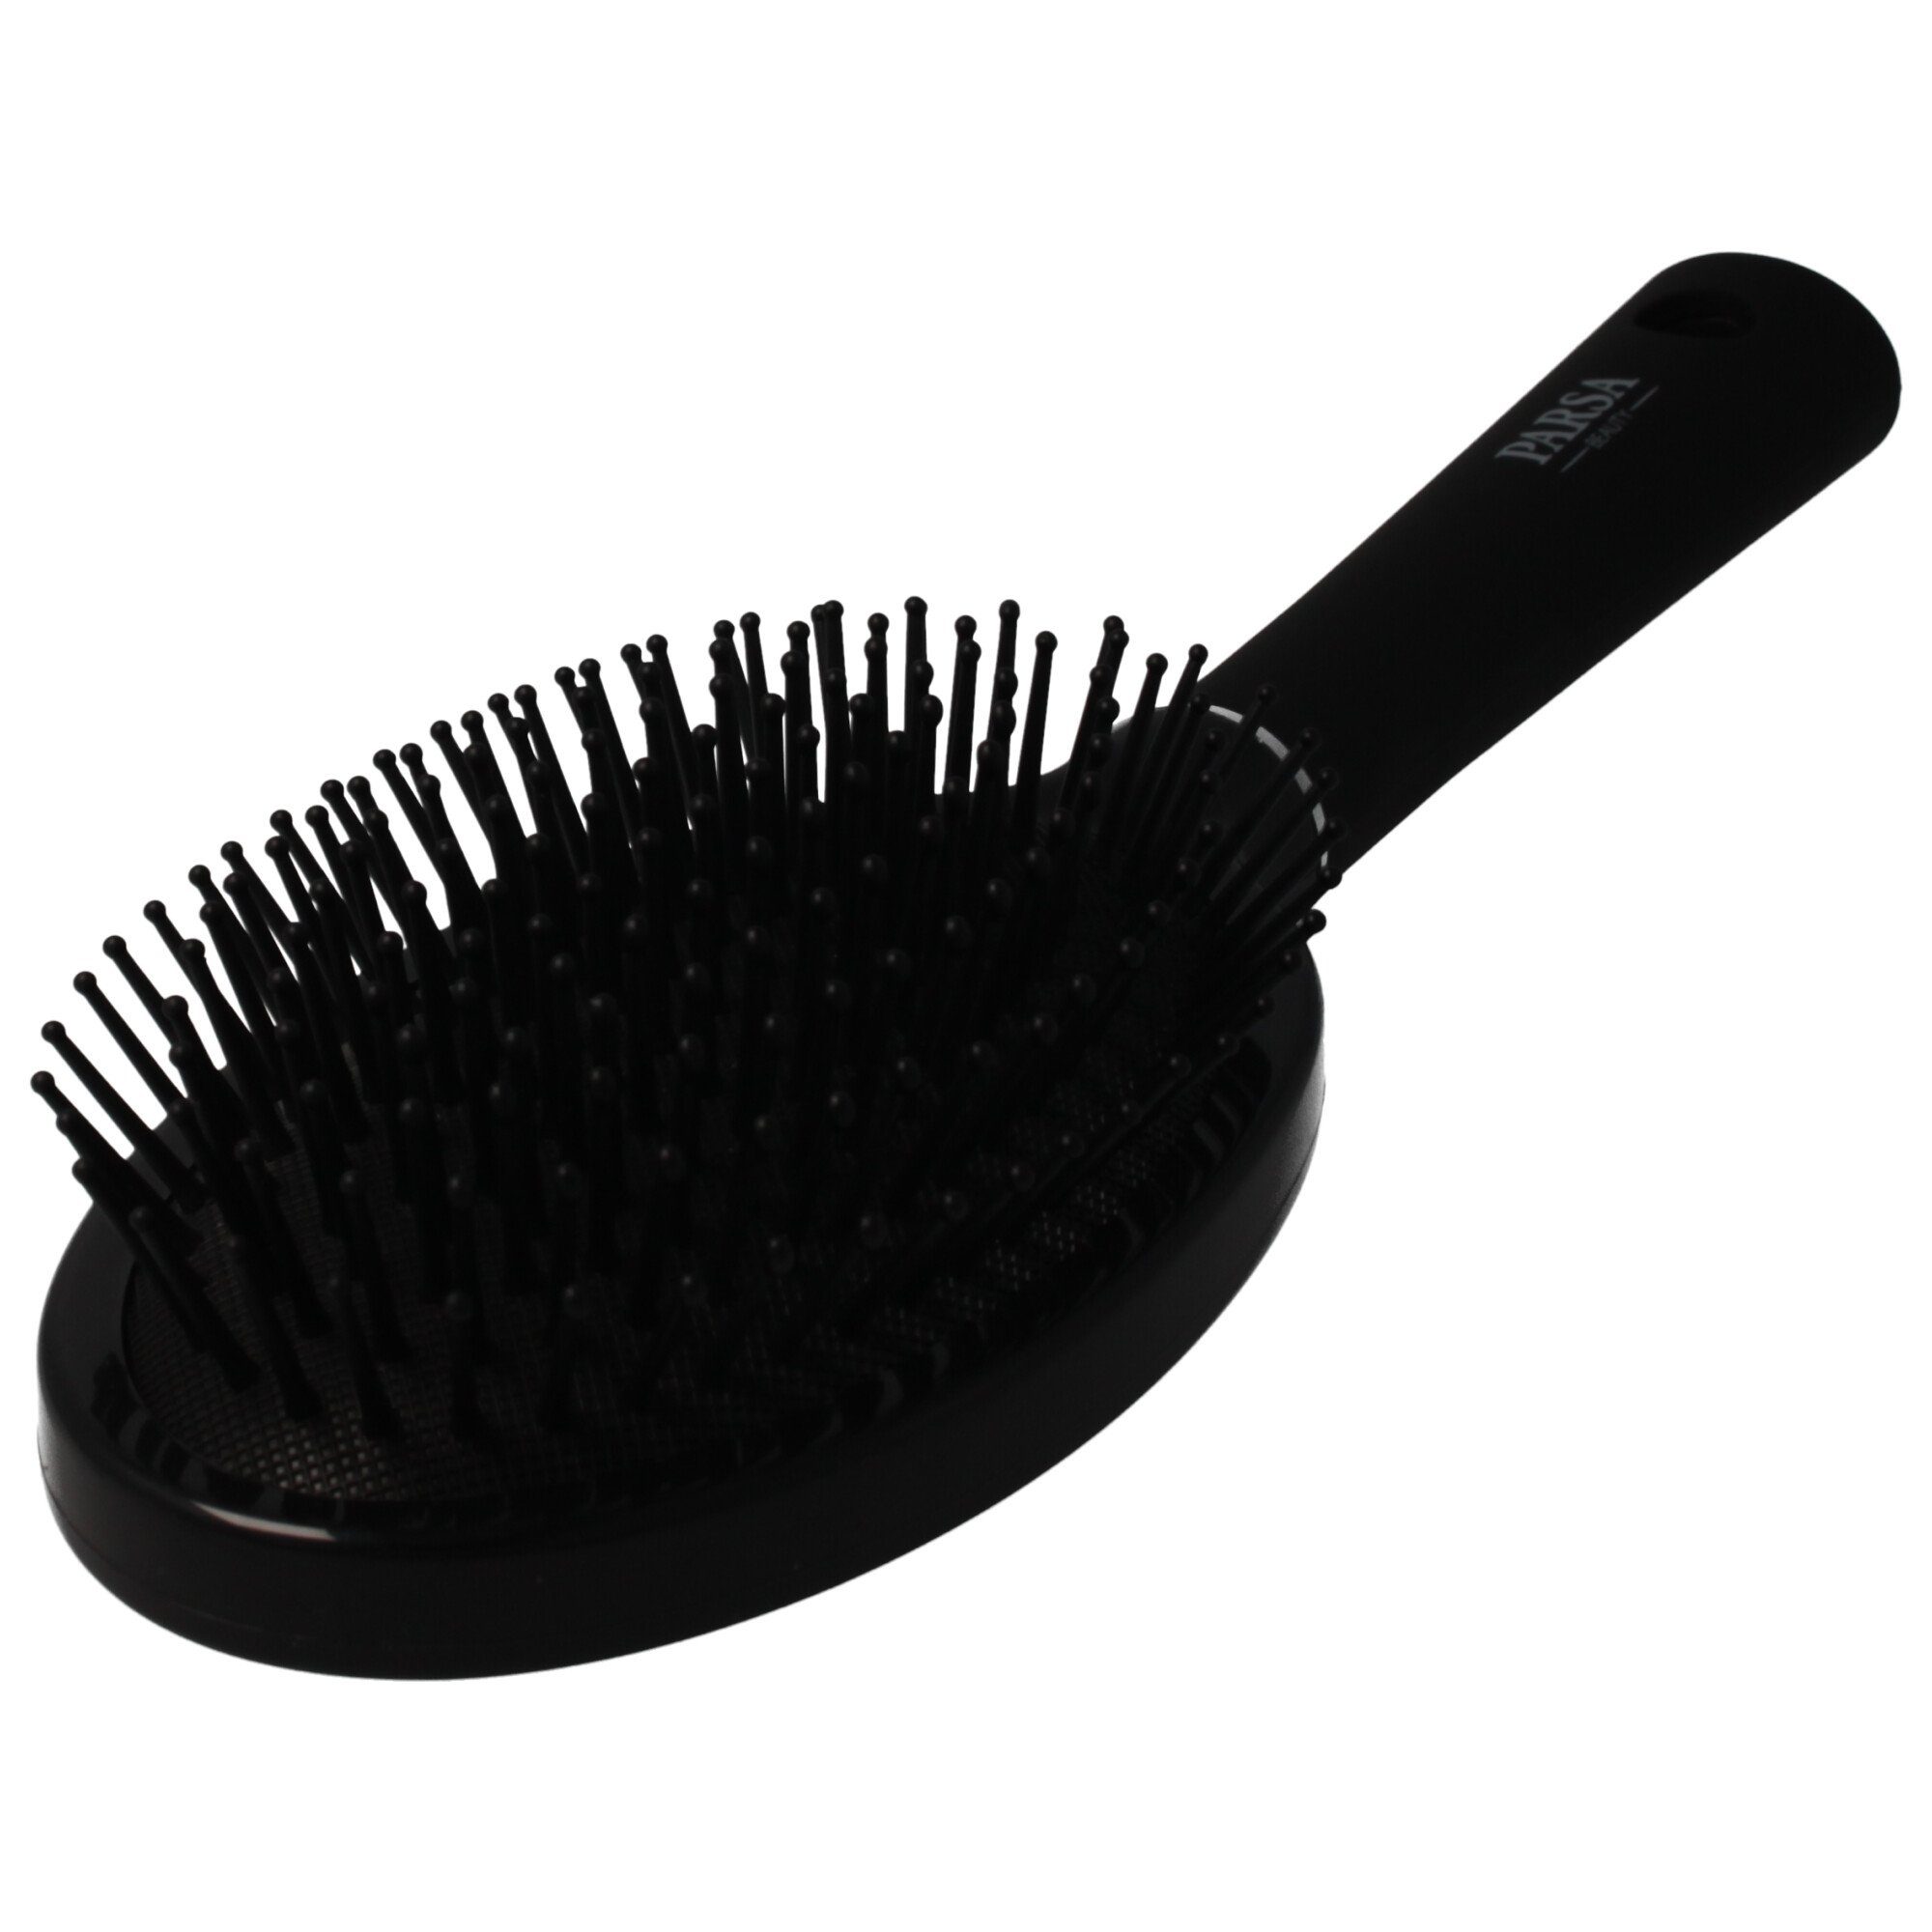 Bürste Oval Trend schwarz Beauty Groß mit Haarbürste PARSA Line Haarbürste Kunststoffpins